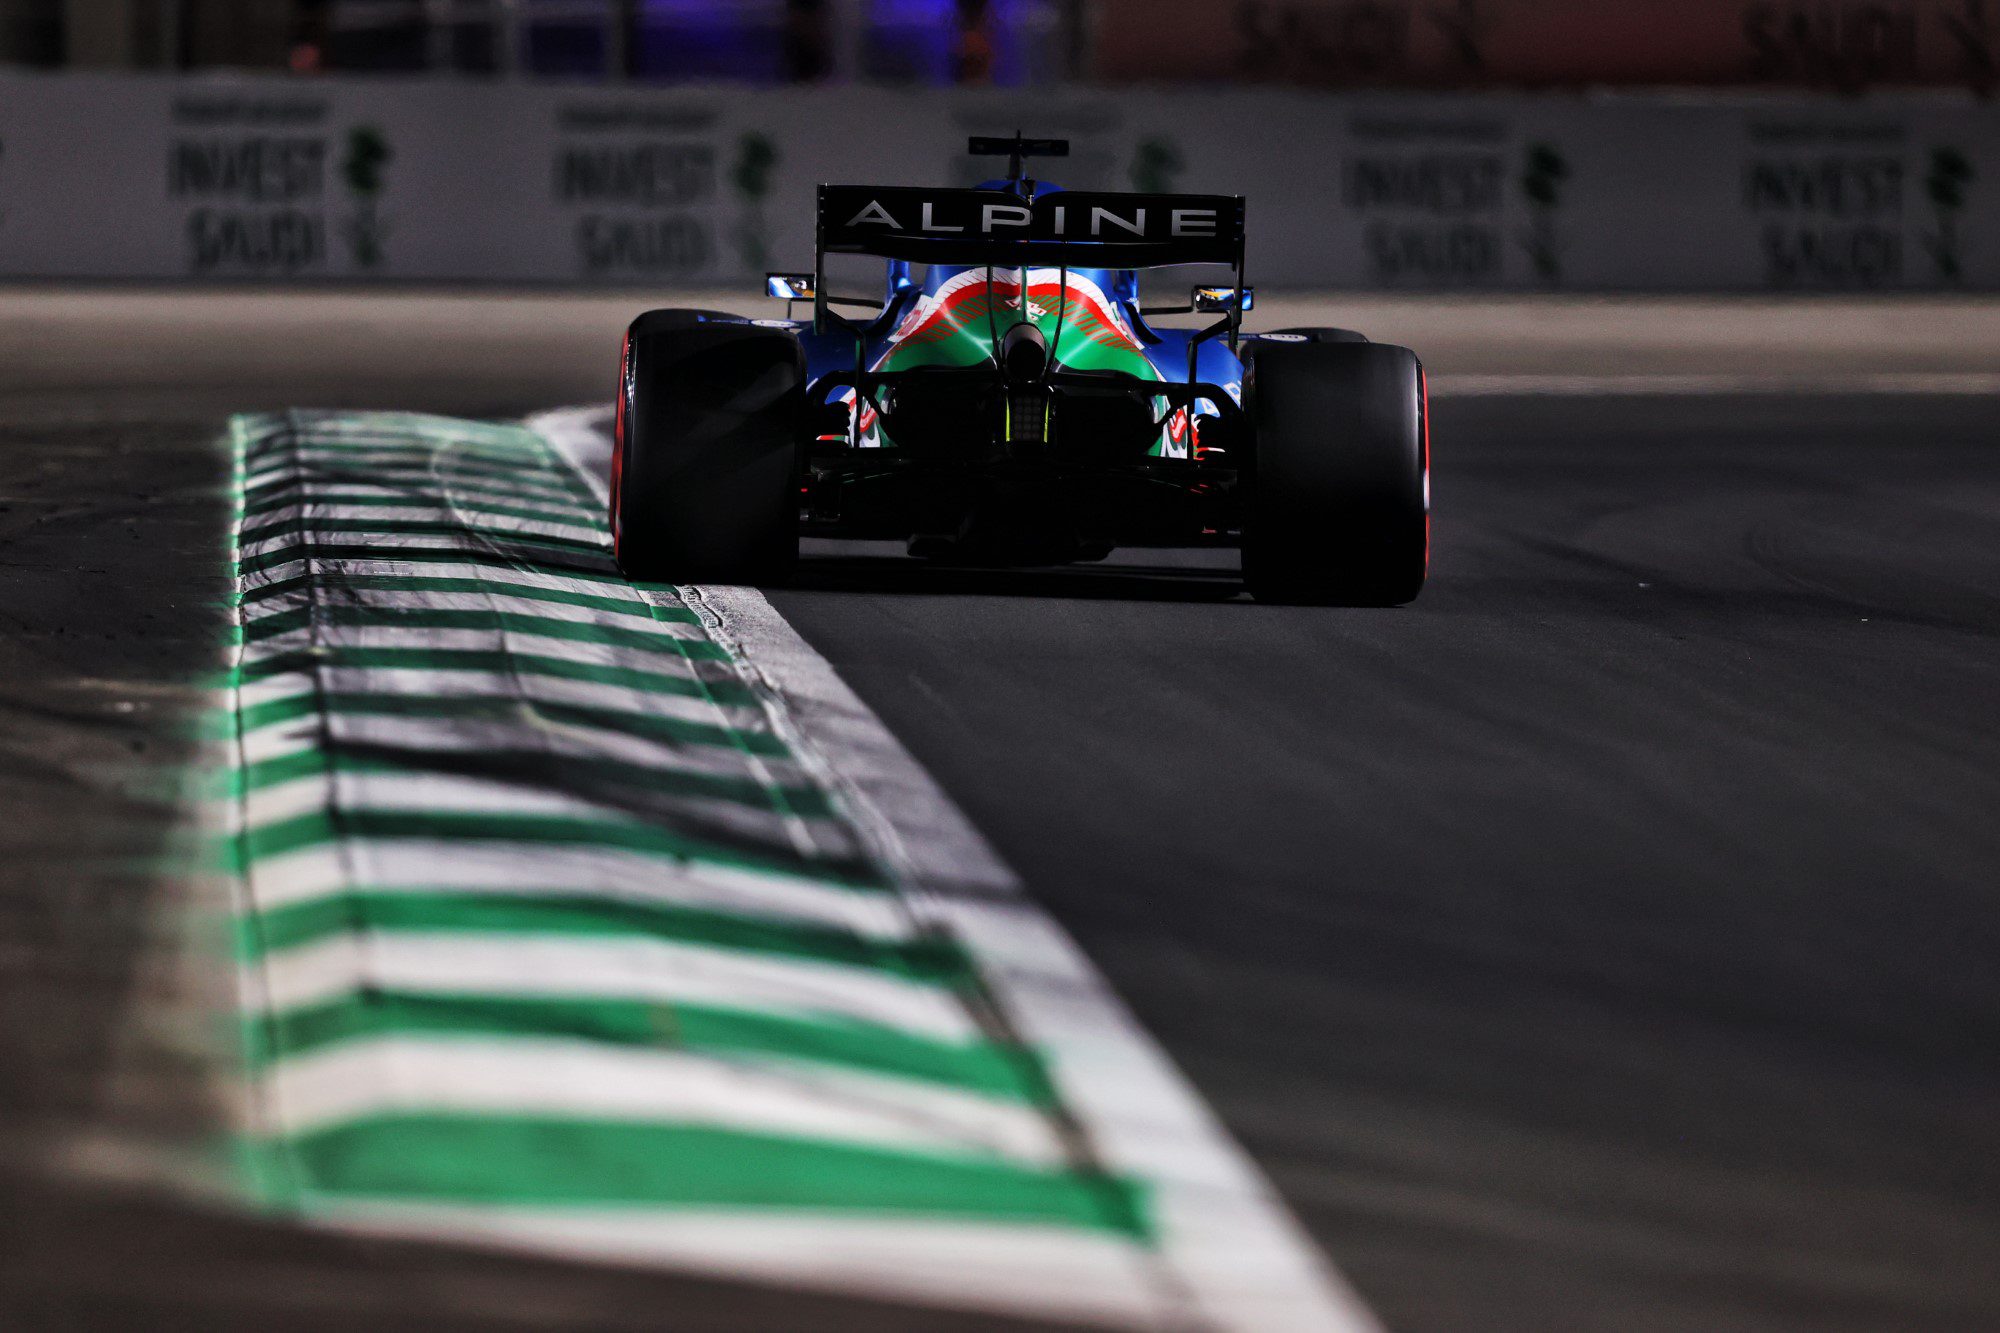 Fernando Alonso, Alpine A521, GP da Arábia Saudita, Jeddah, F1 2021